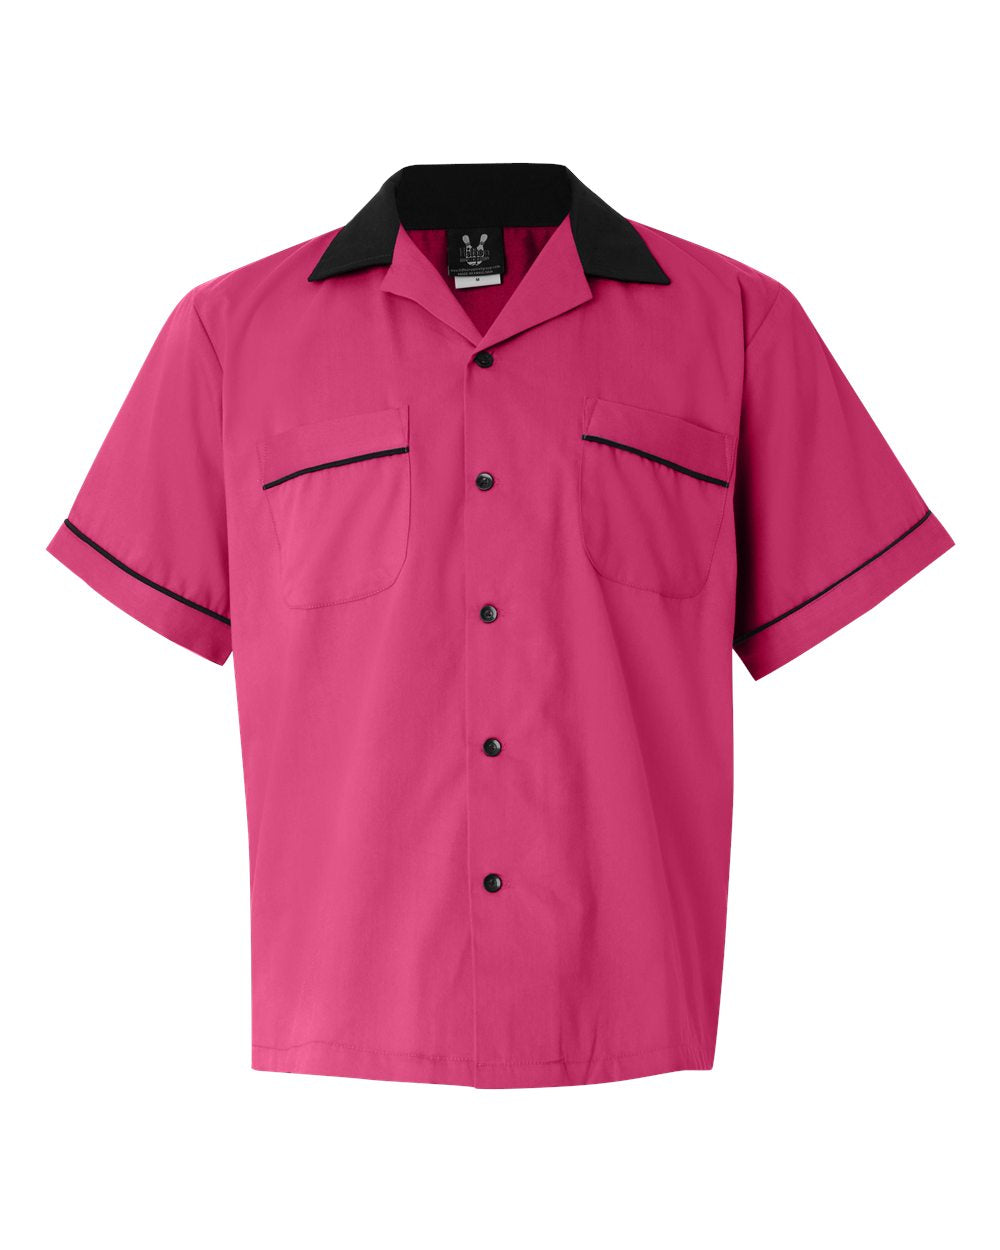 Hilton HP2244 Bowling Shirt Pink with Black Trim Custom Text or Design